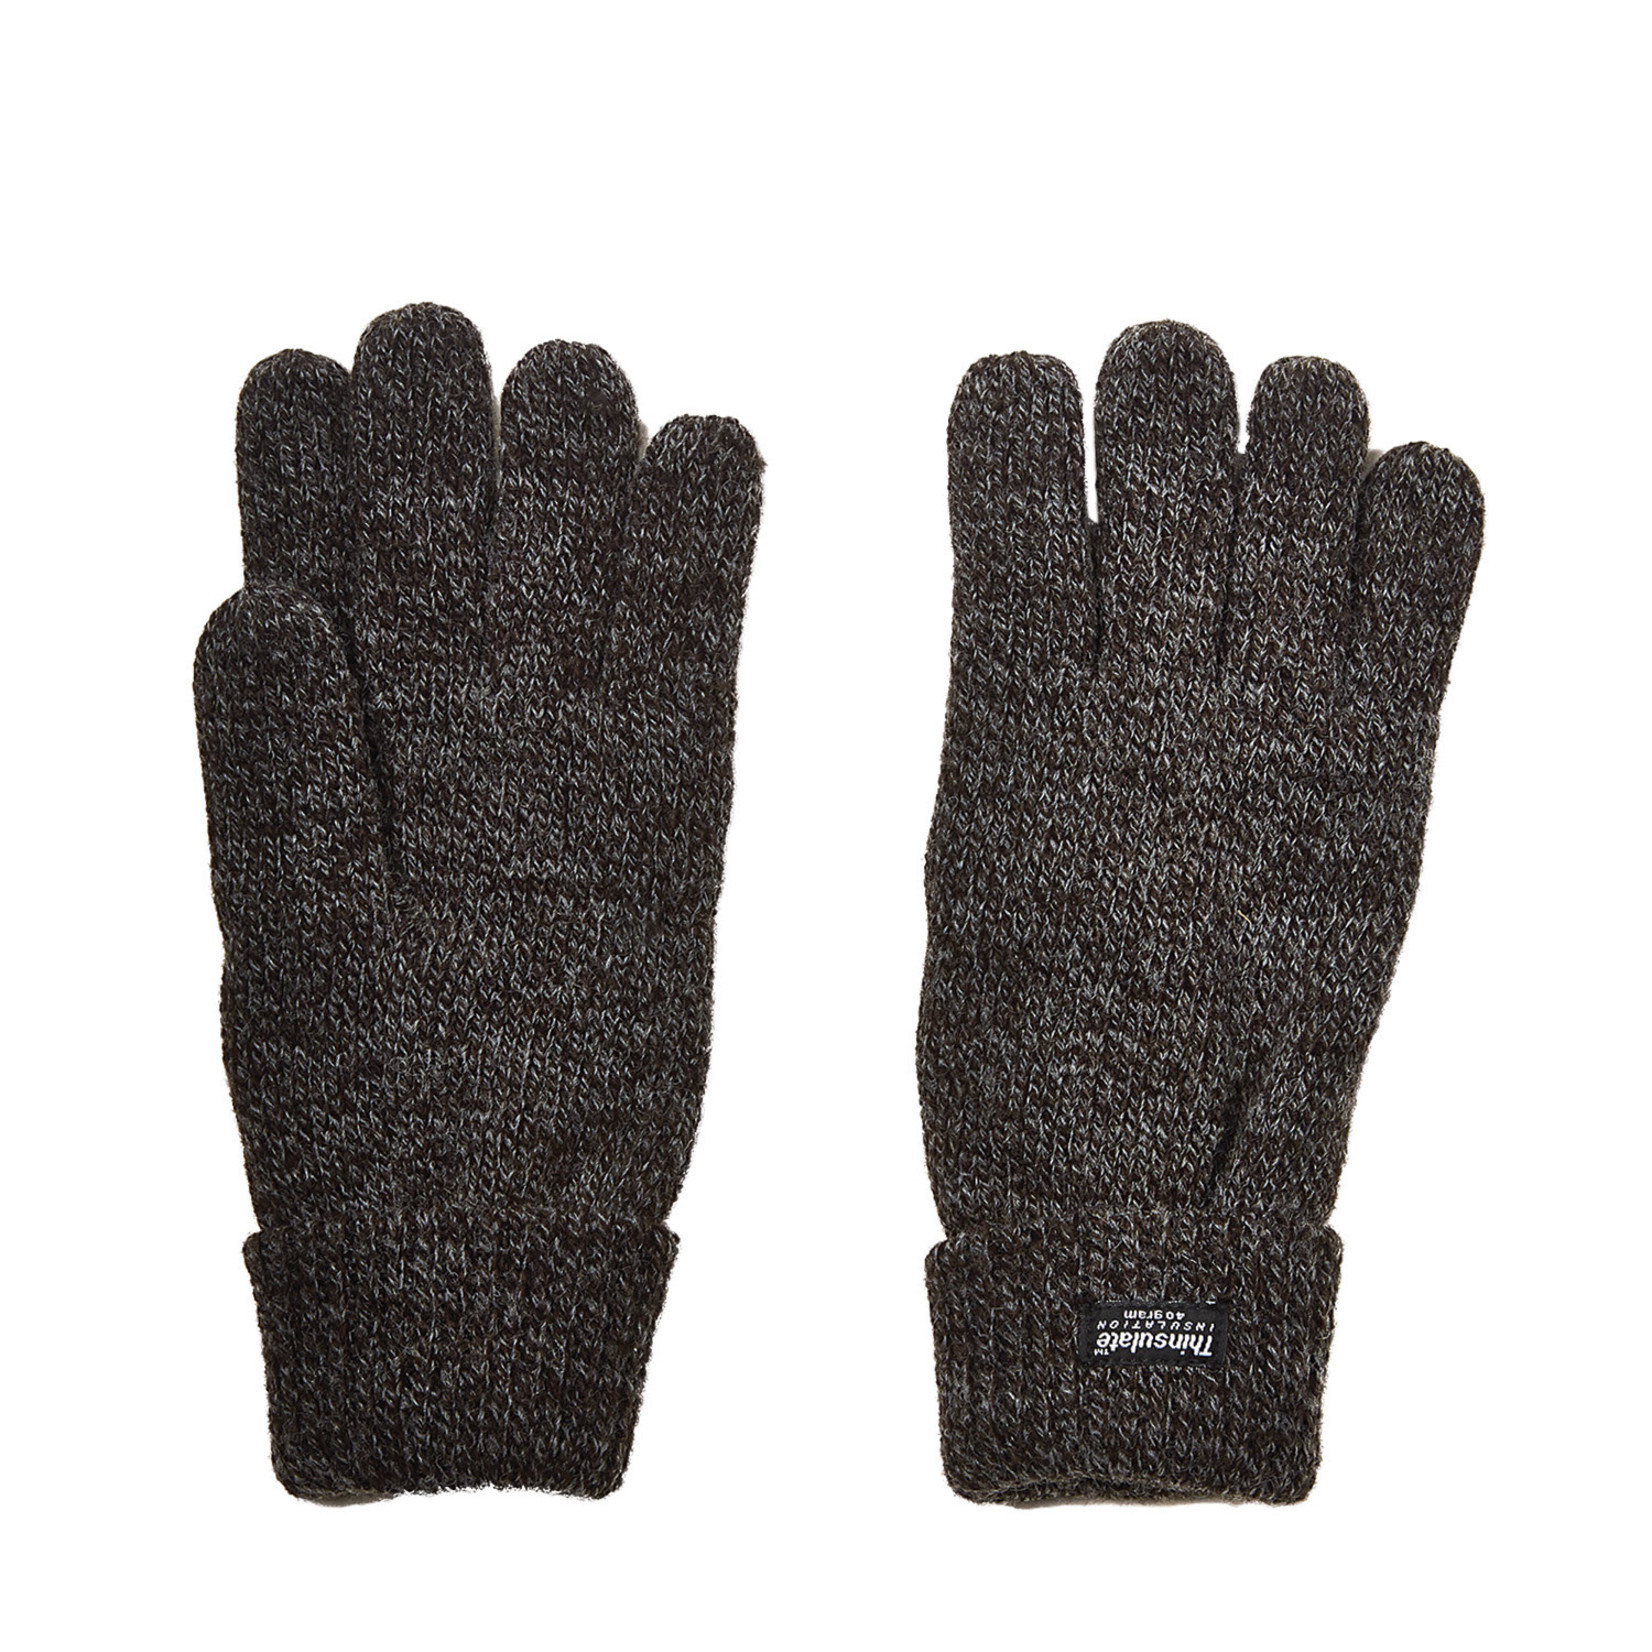 Stetson Marquette Thinsulate Winter Gloves